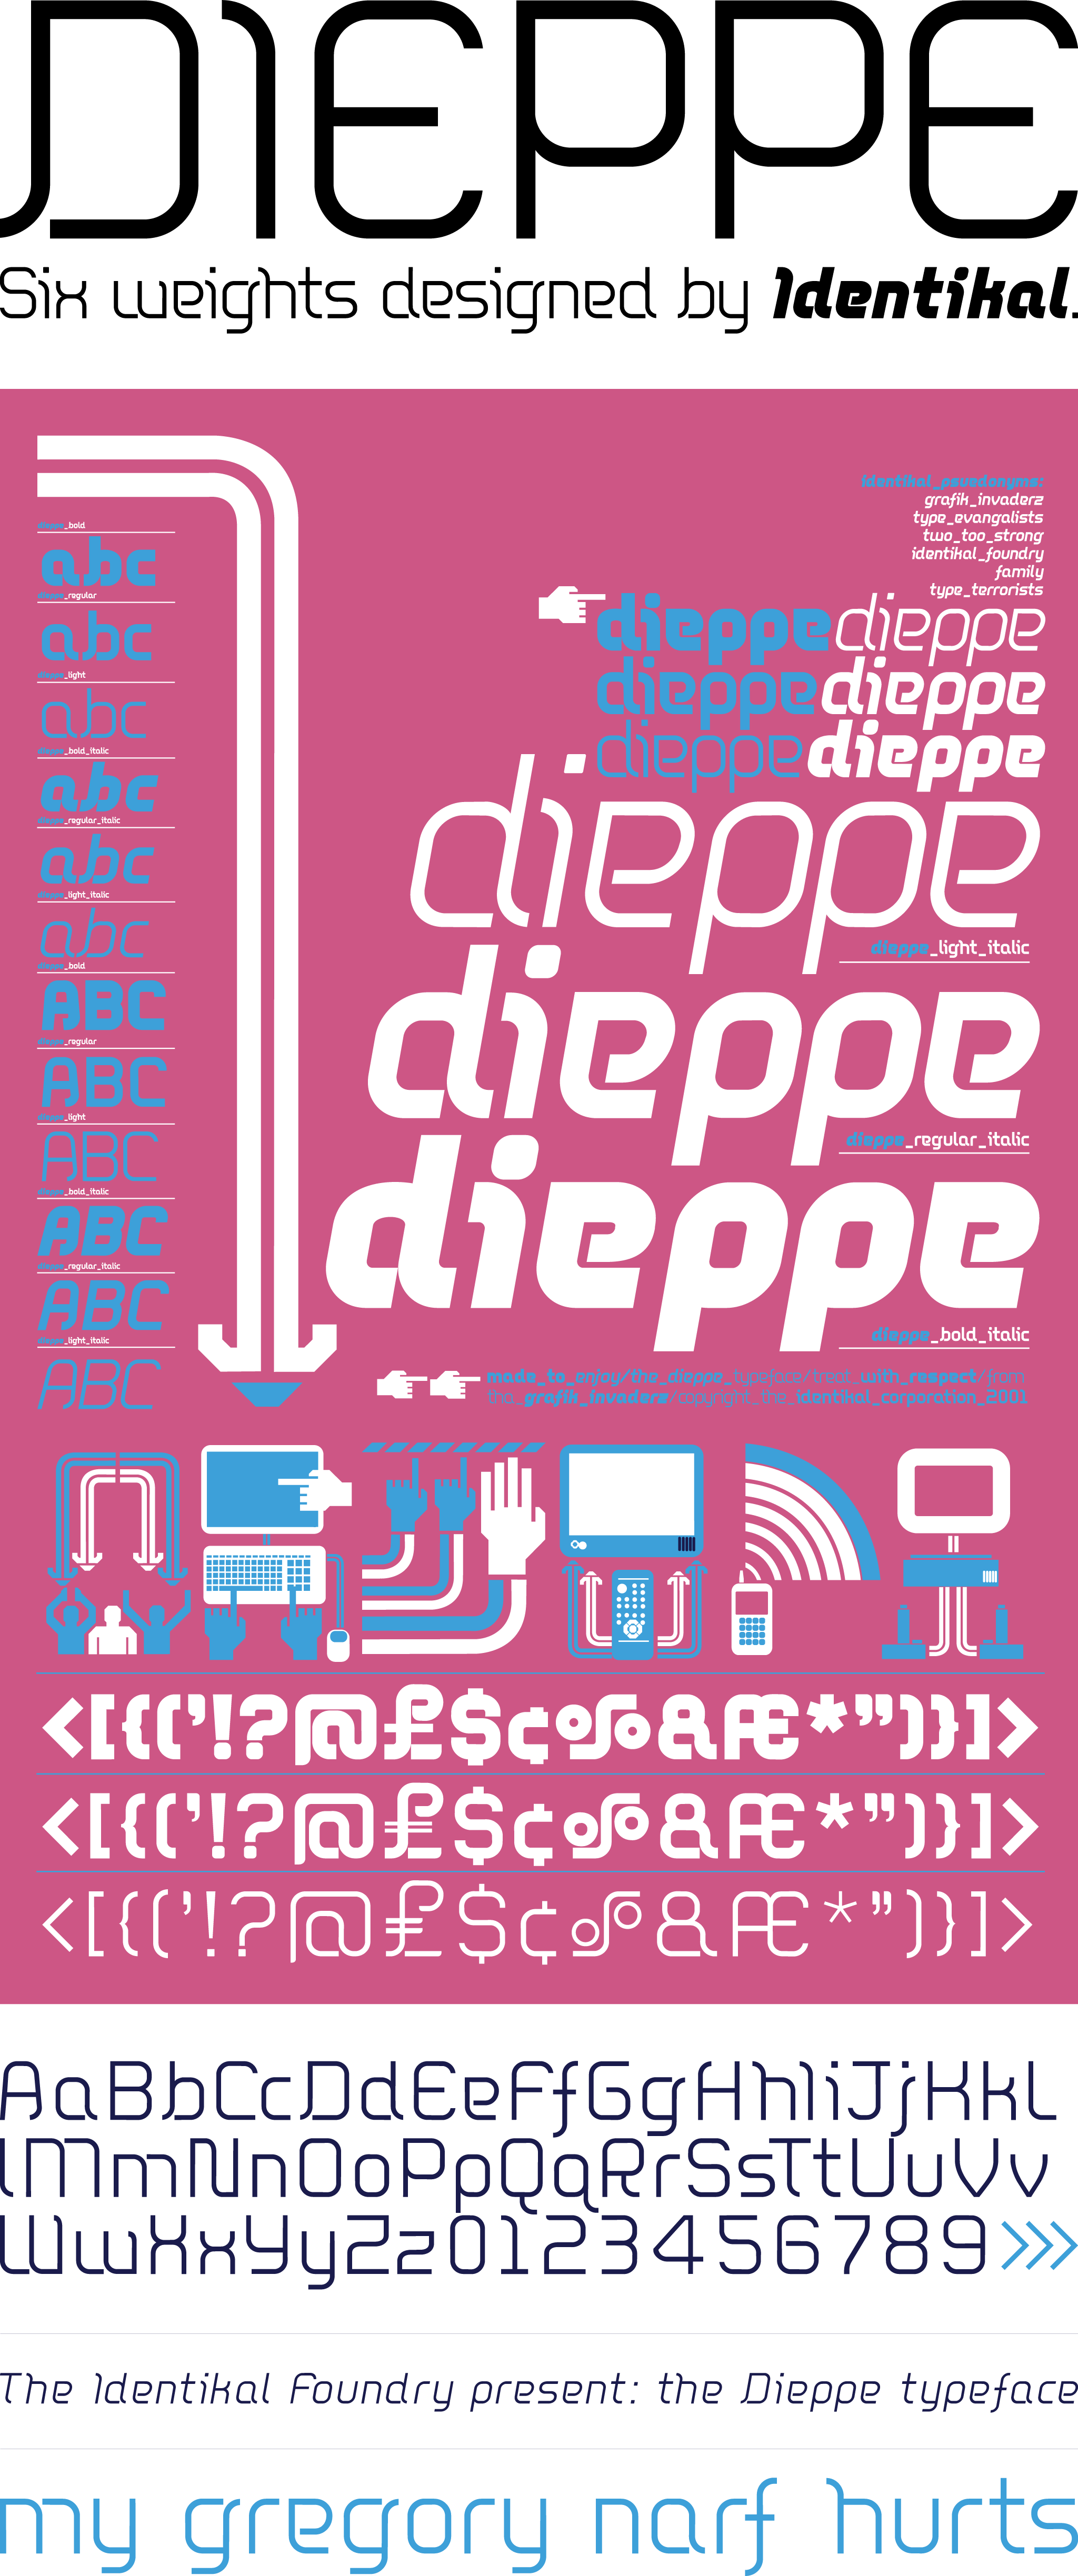 Dieppe-billboard